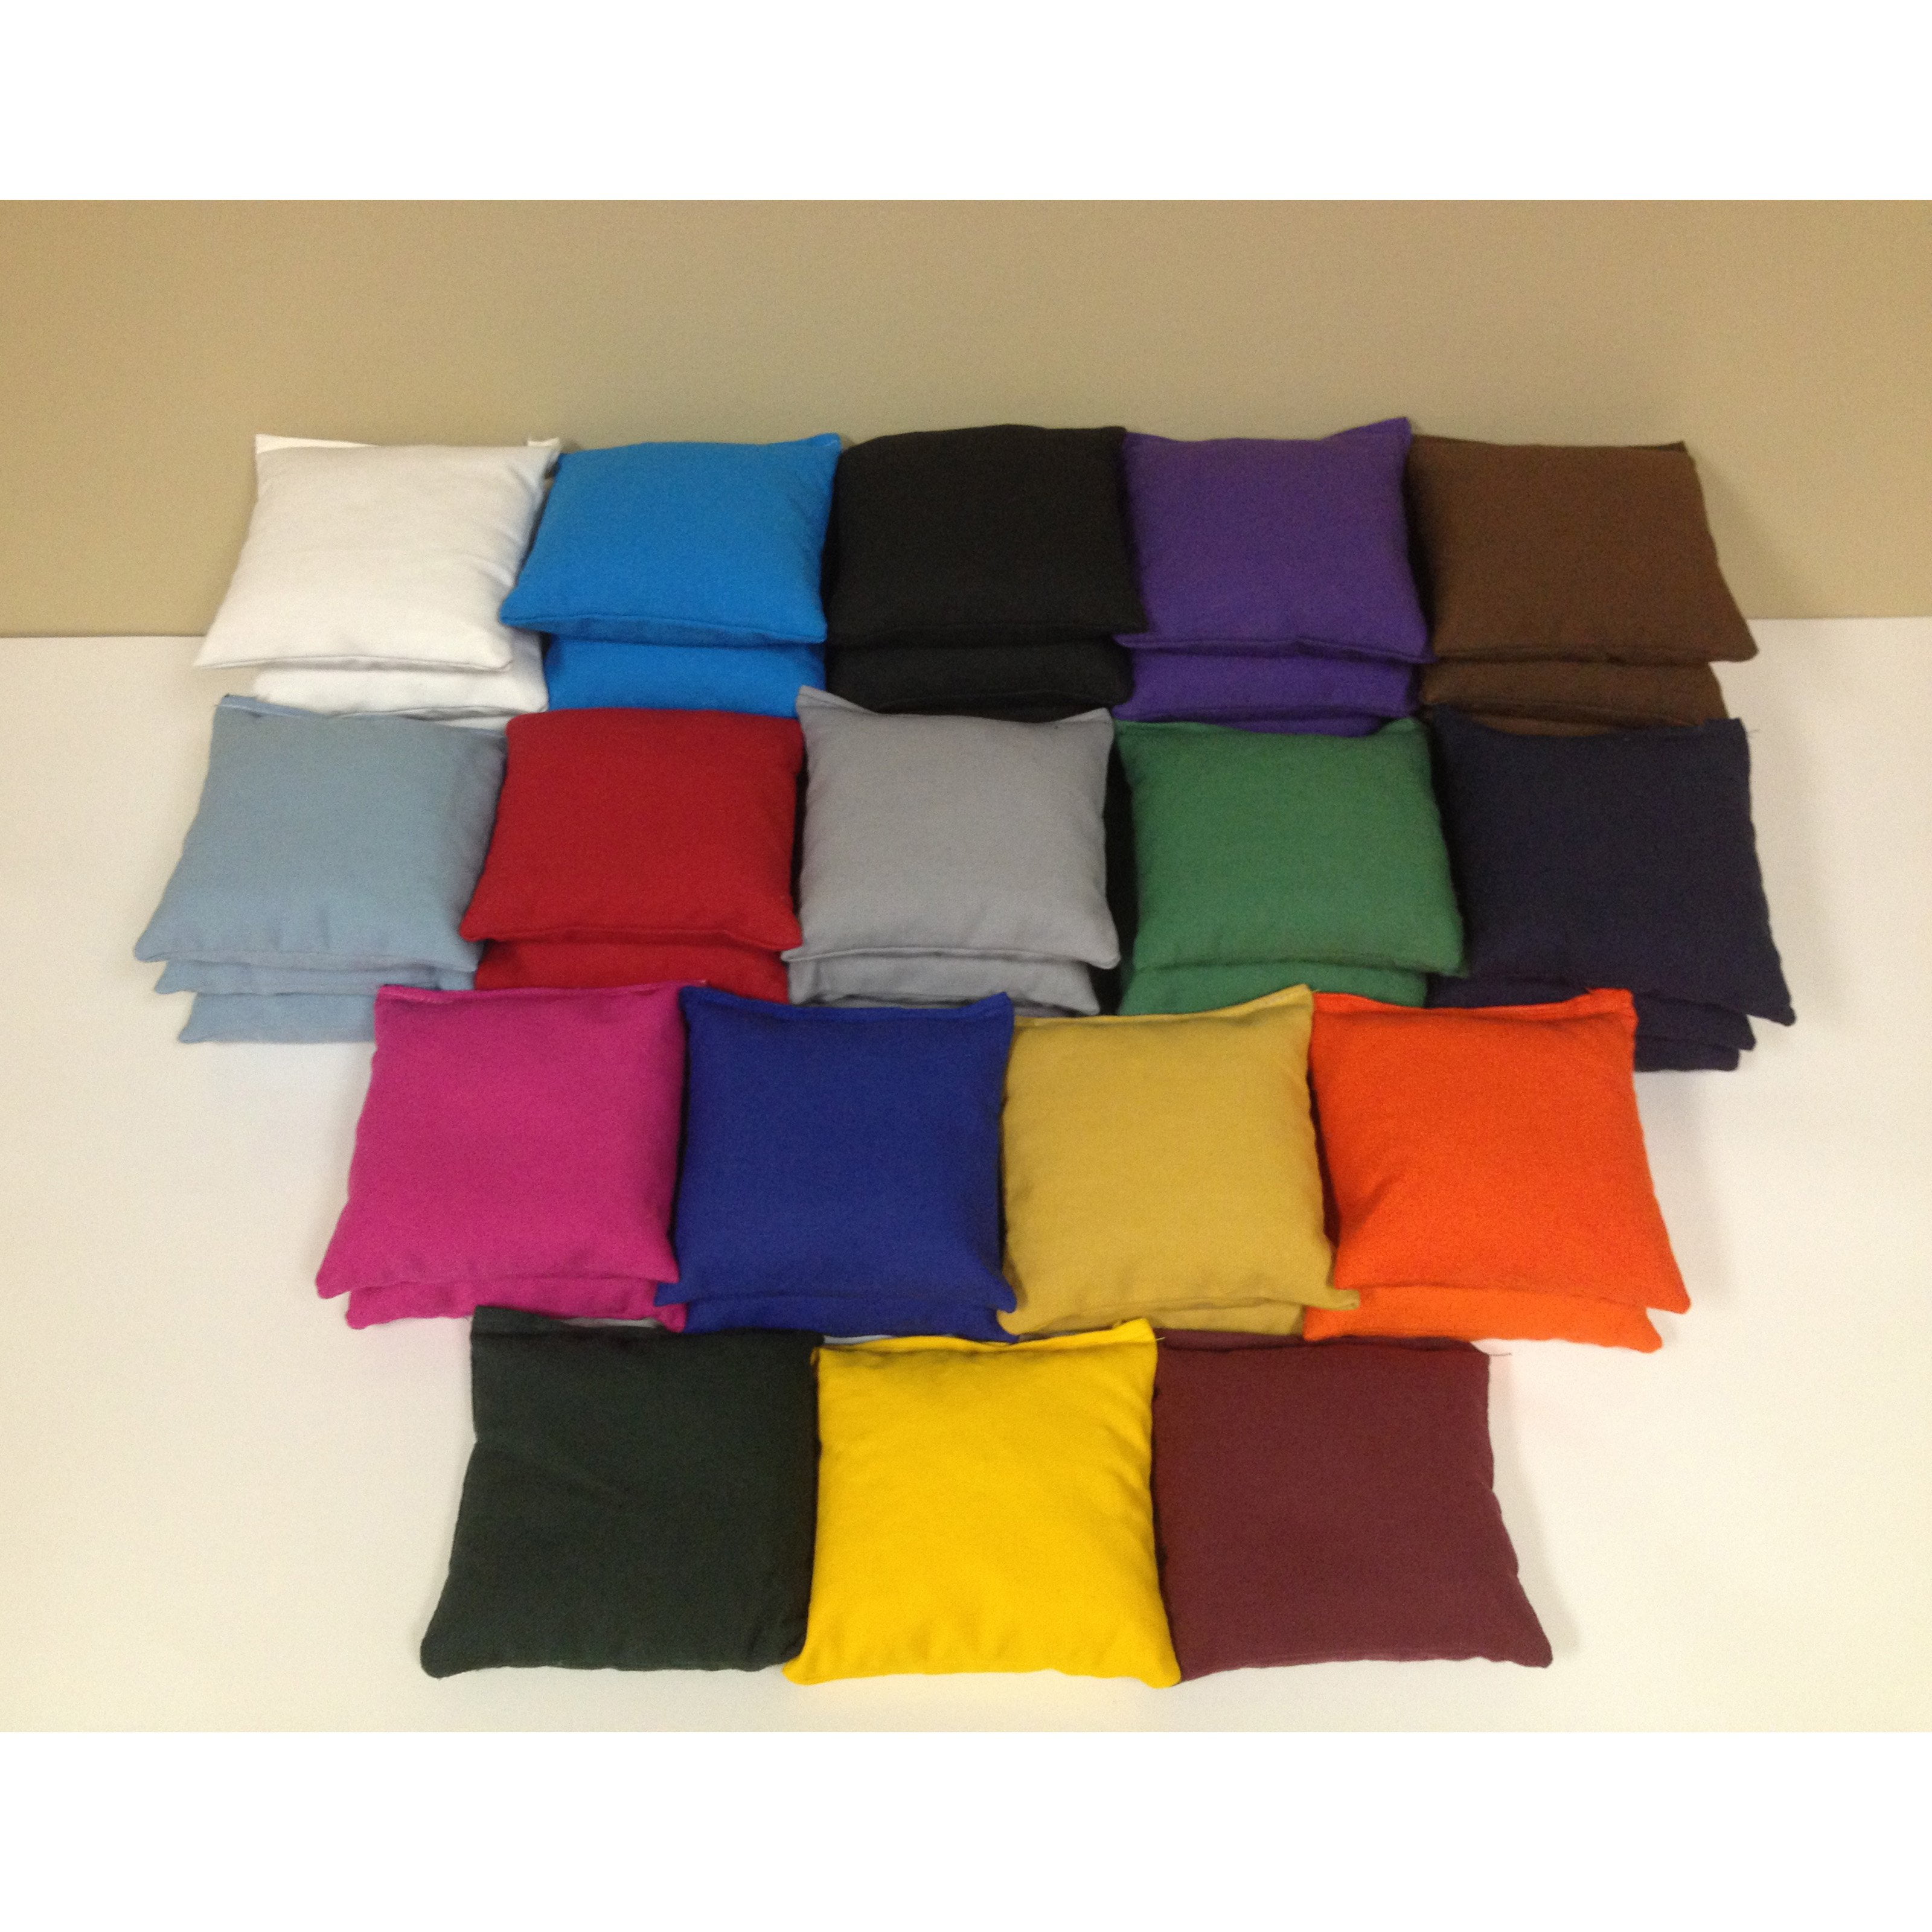 Saipan Embroidered Cornhole Corn Hole Bags Set of 8 W Storage Bag 